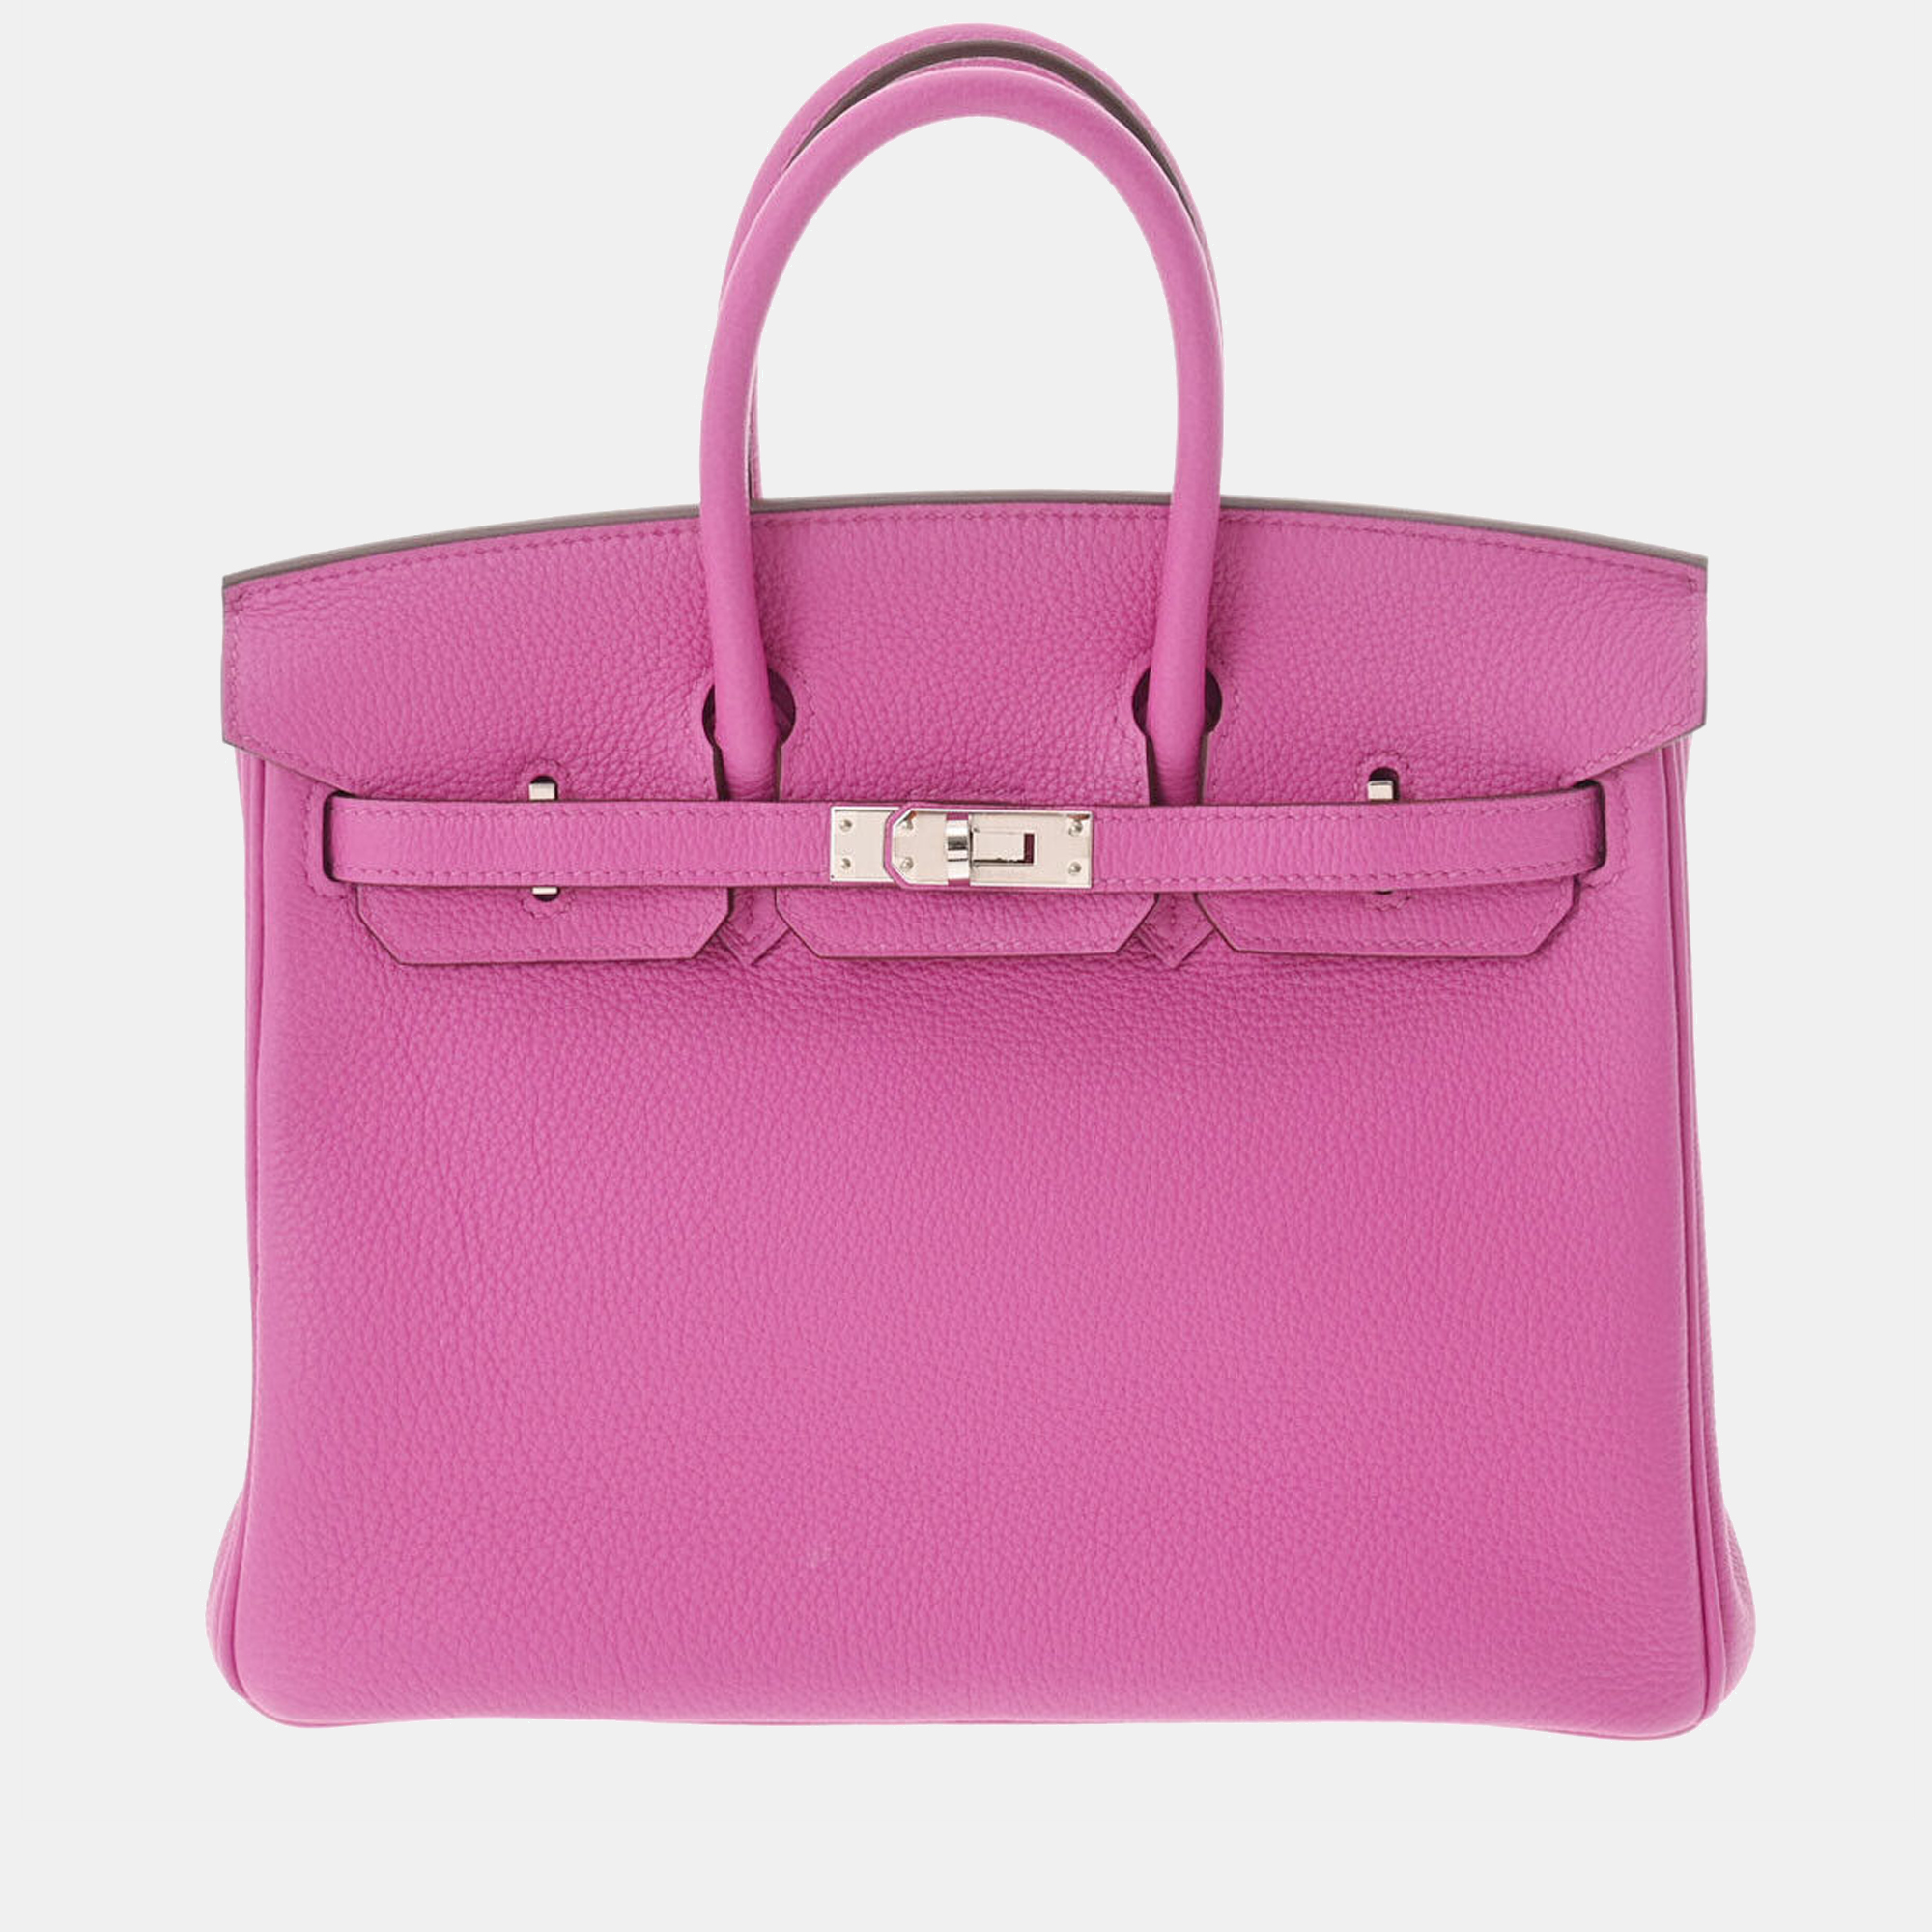 Pre-owned Hermes Pink Togo Leather Palladium Hardware Birkin 25 Bag